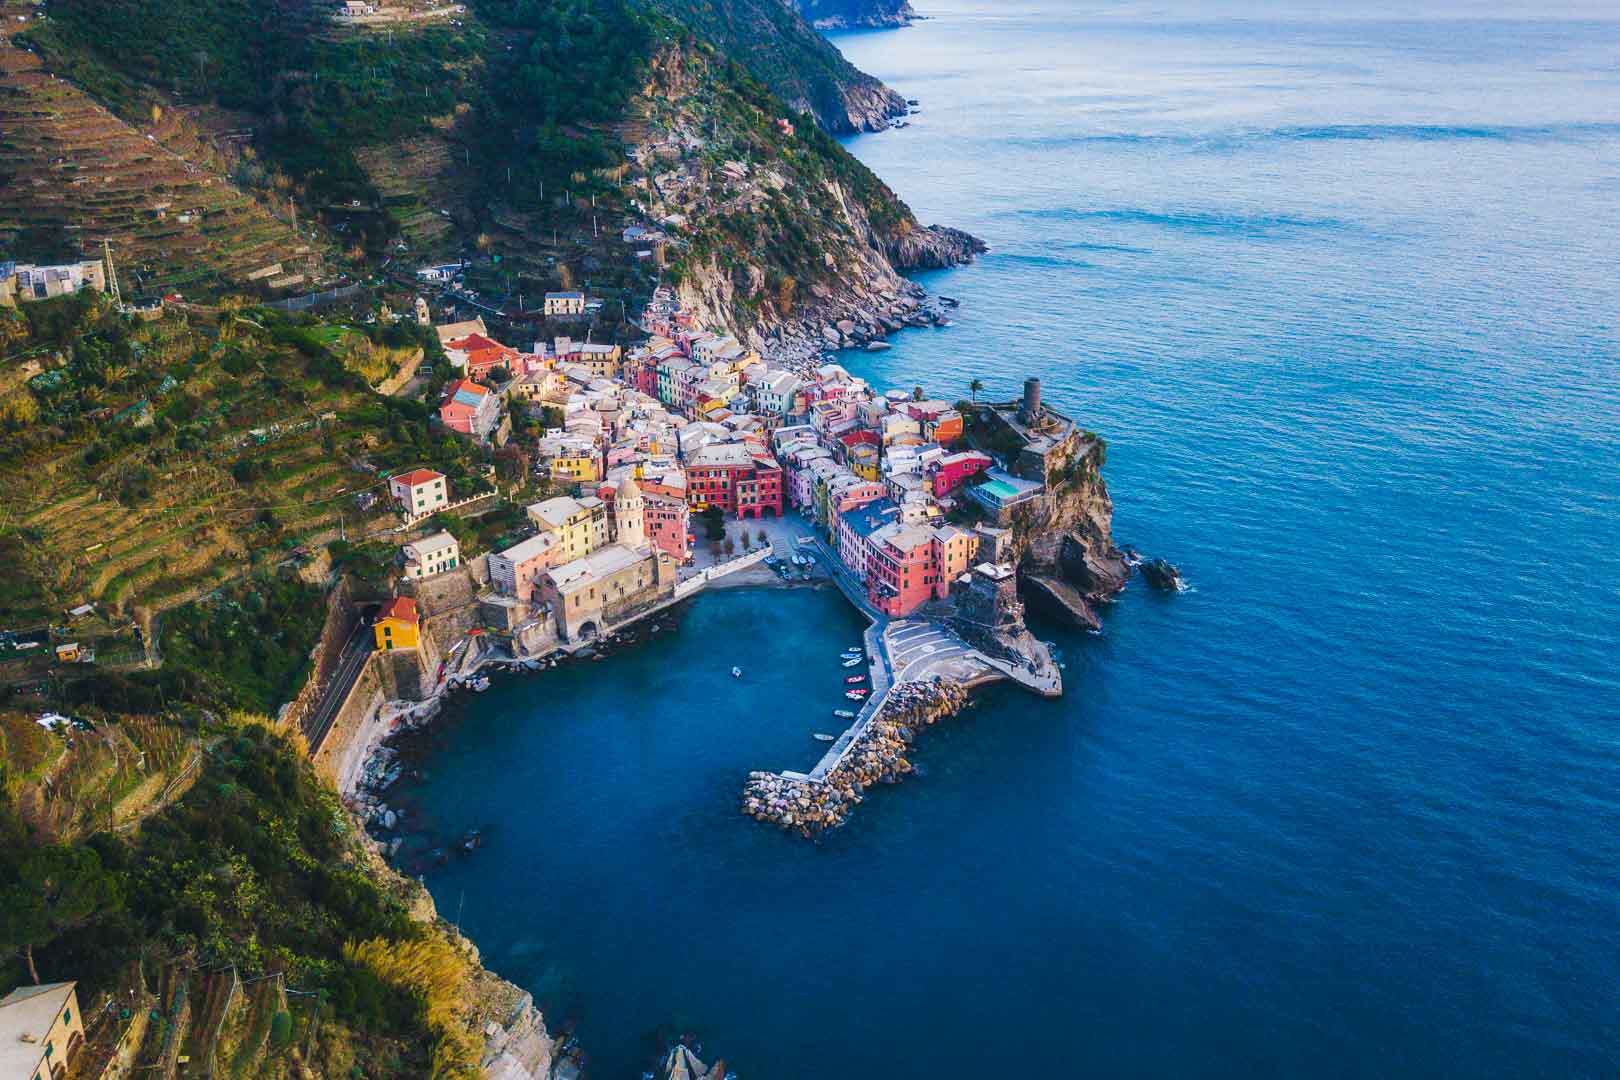 Vernazza, Cinque Terre – The Jewel of the Cinque Terre